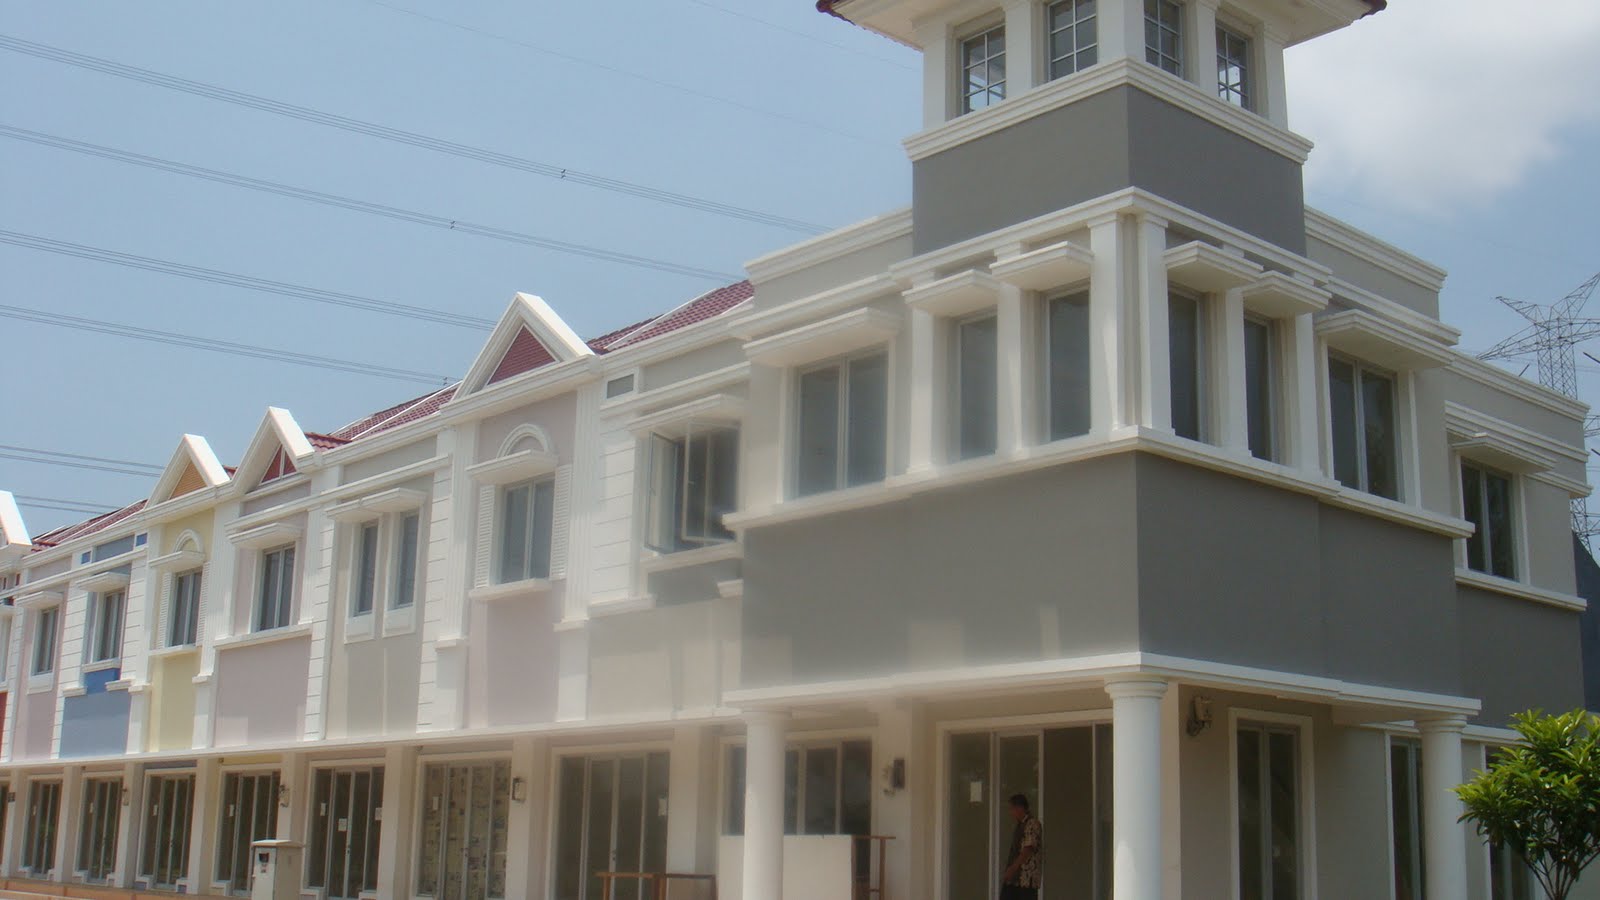 Rumah Limasan Modern  joglo traditional house from java 